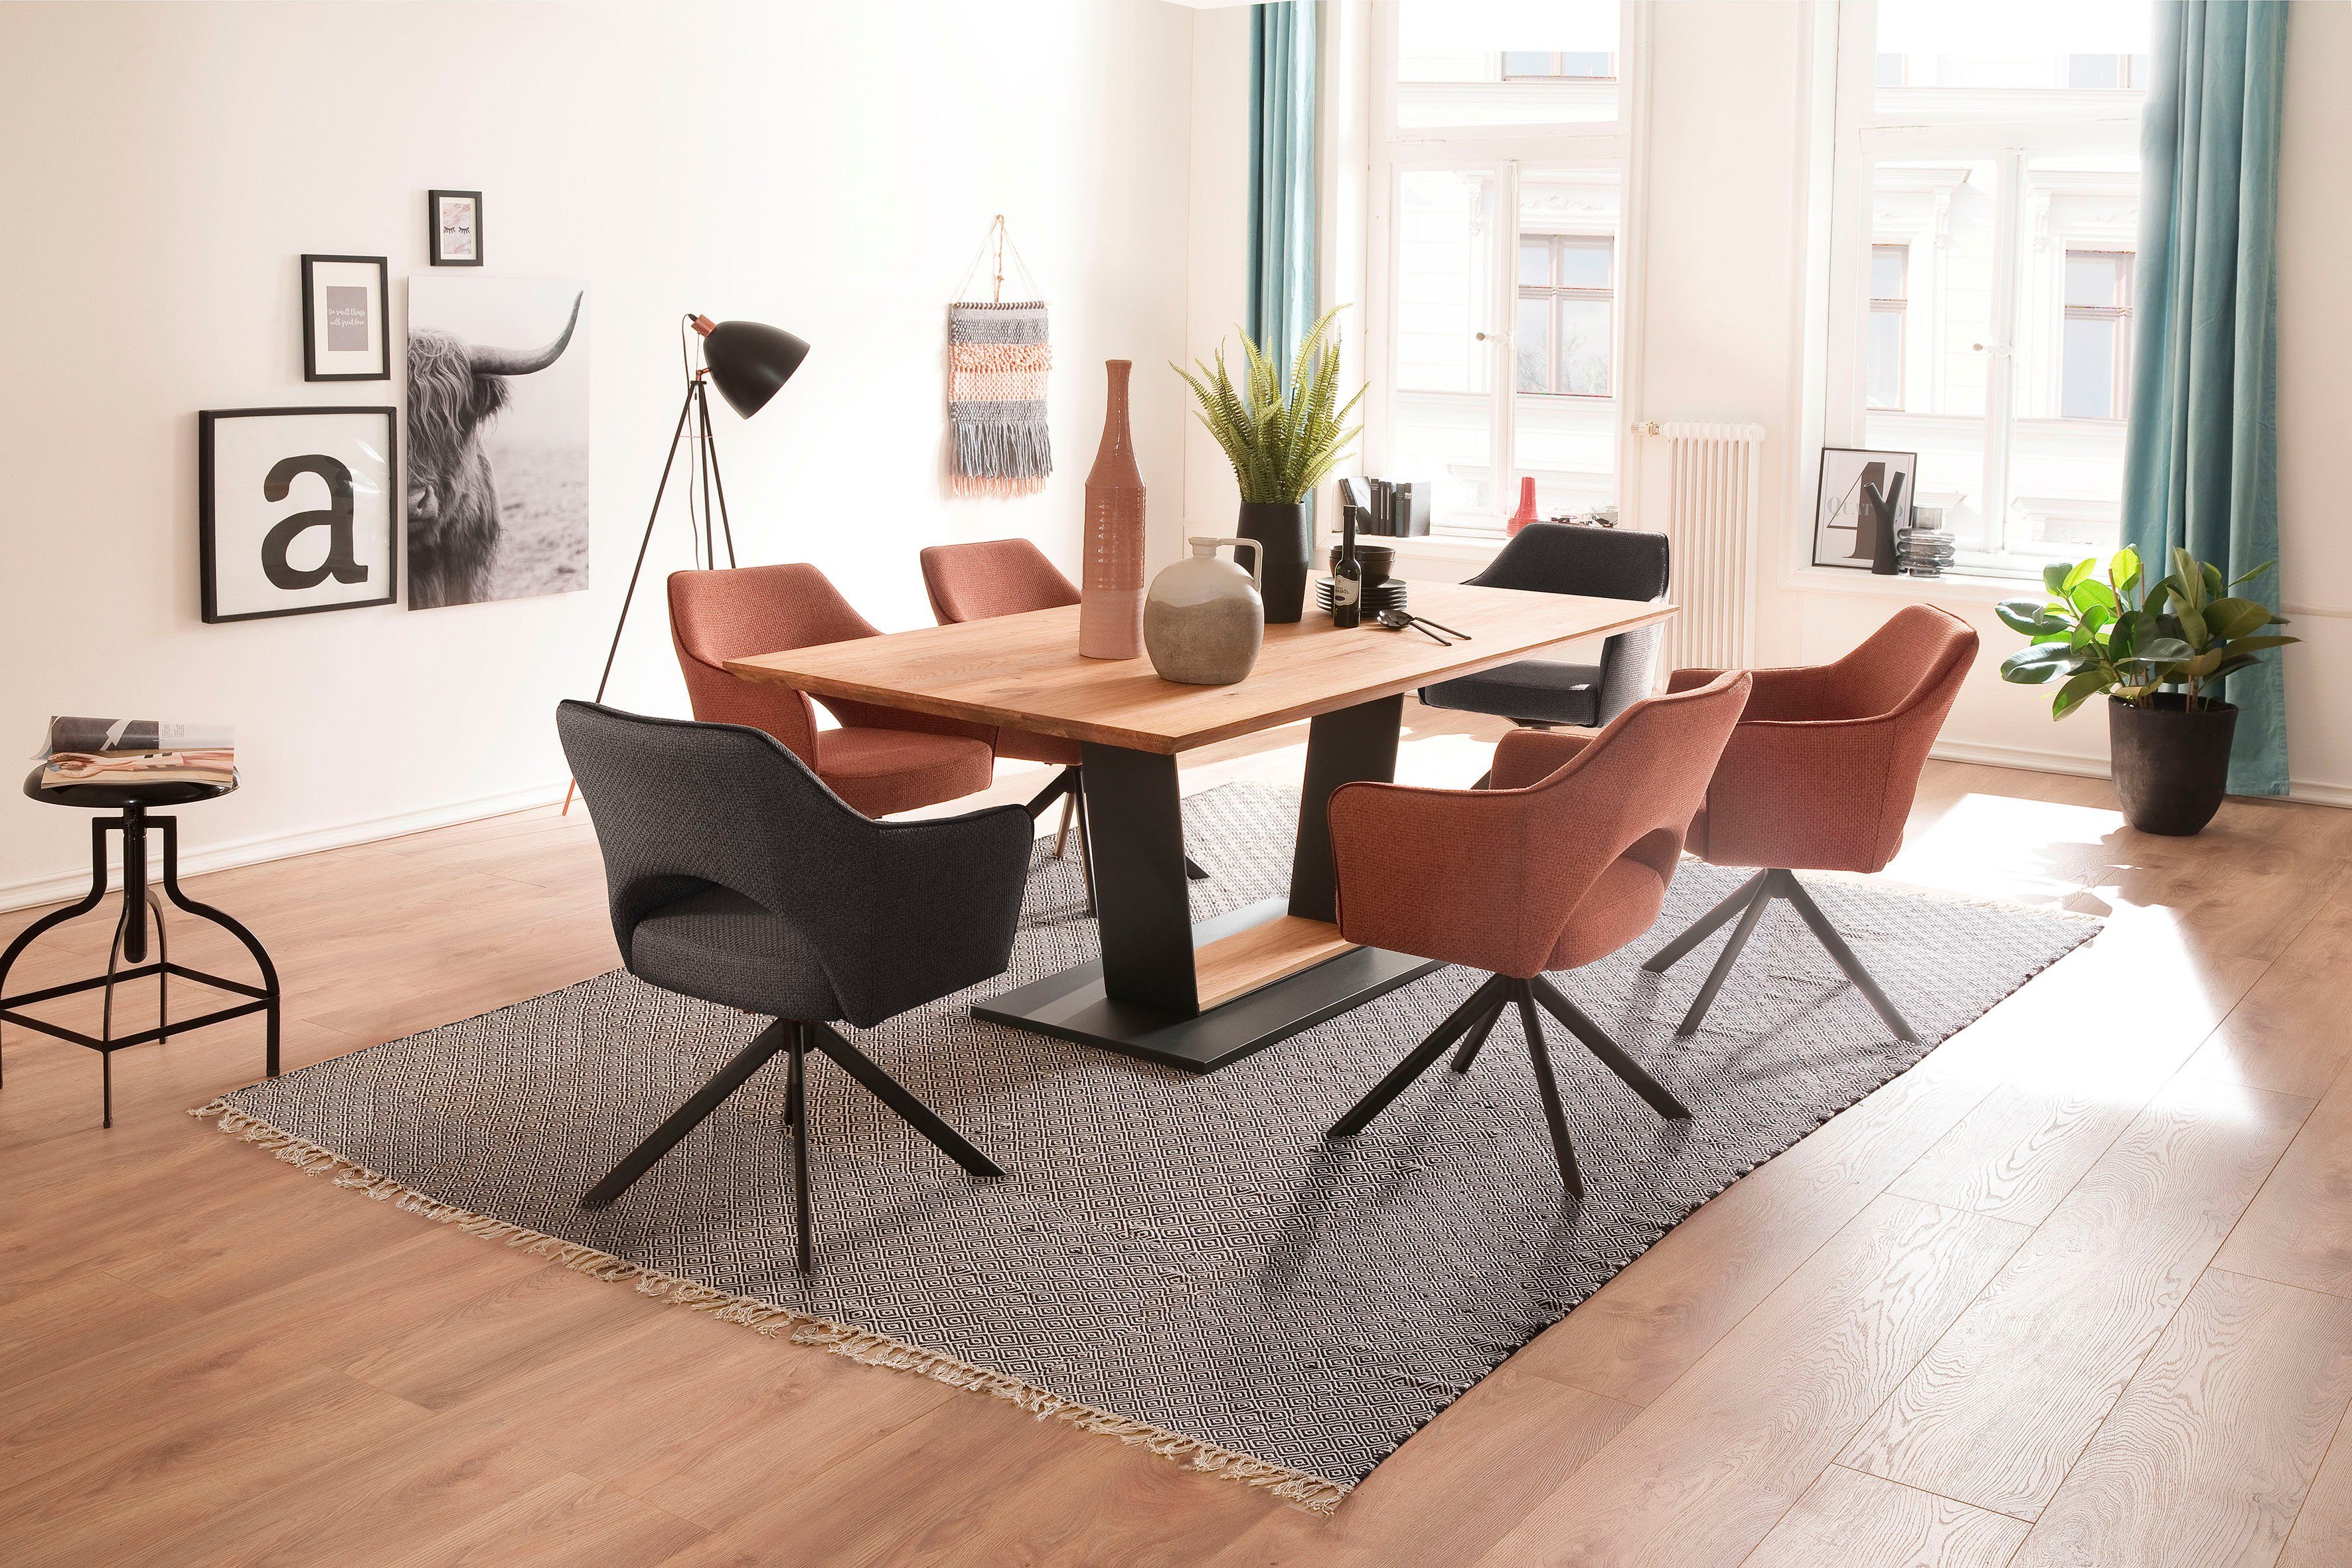 MCA drehbar schwarz furniture Rostbraun mit (Set, 4-Fußstuhl 2 180° Metall lackiert Tonala St), Nivellierung matt |